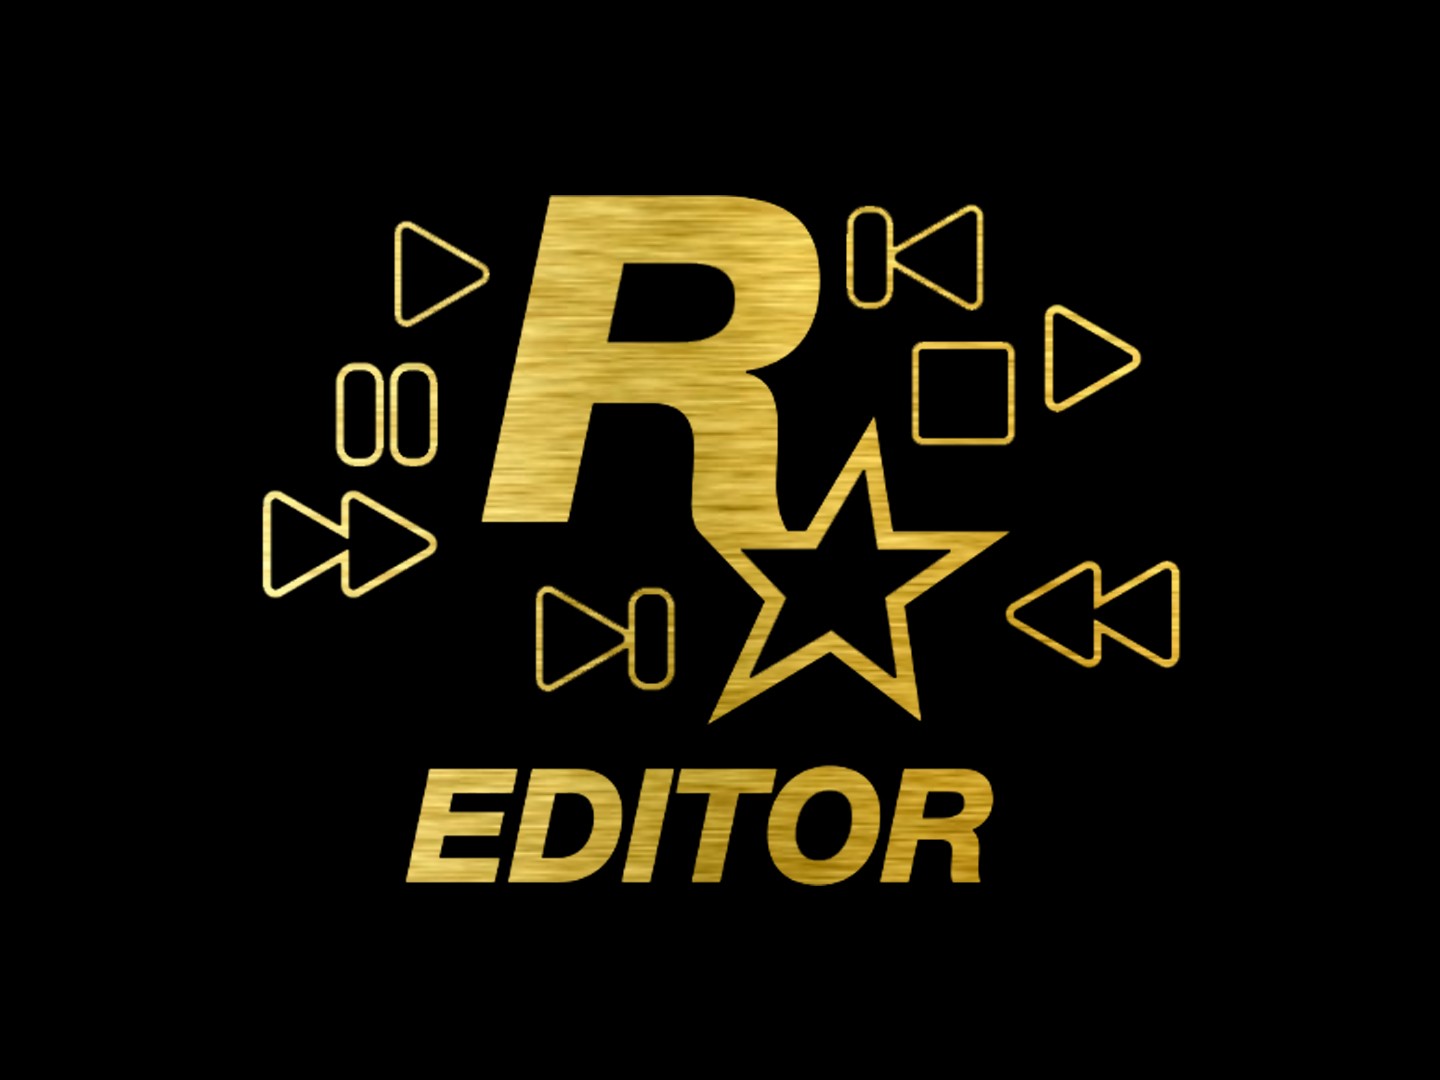 Guide Rockstar Editior